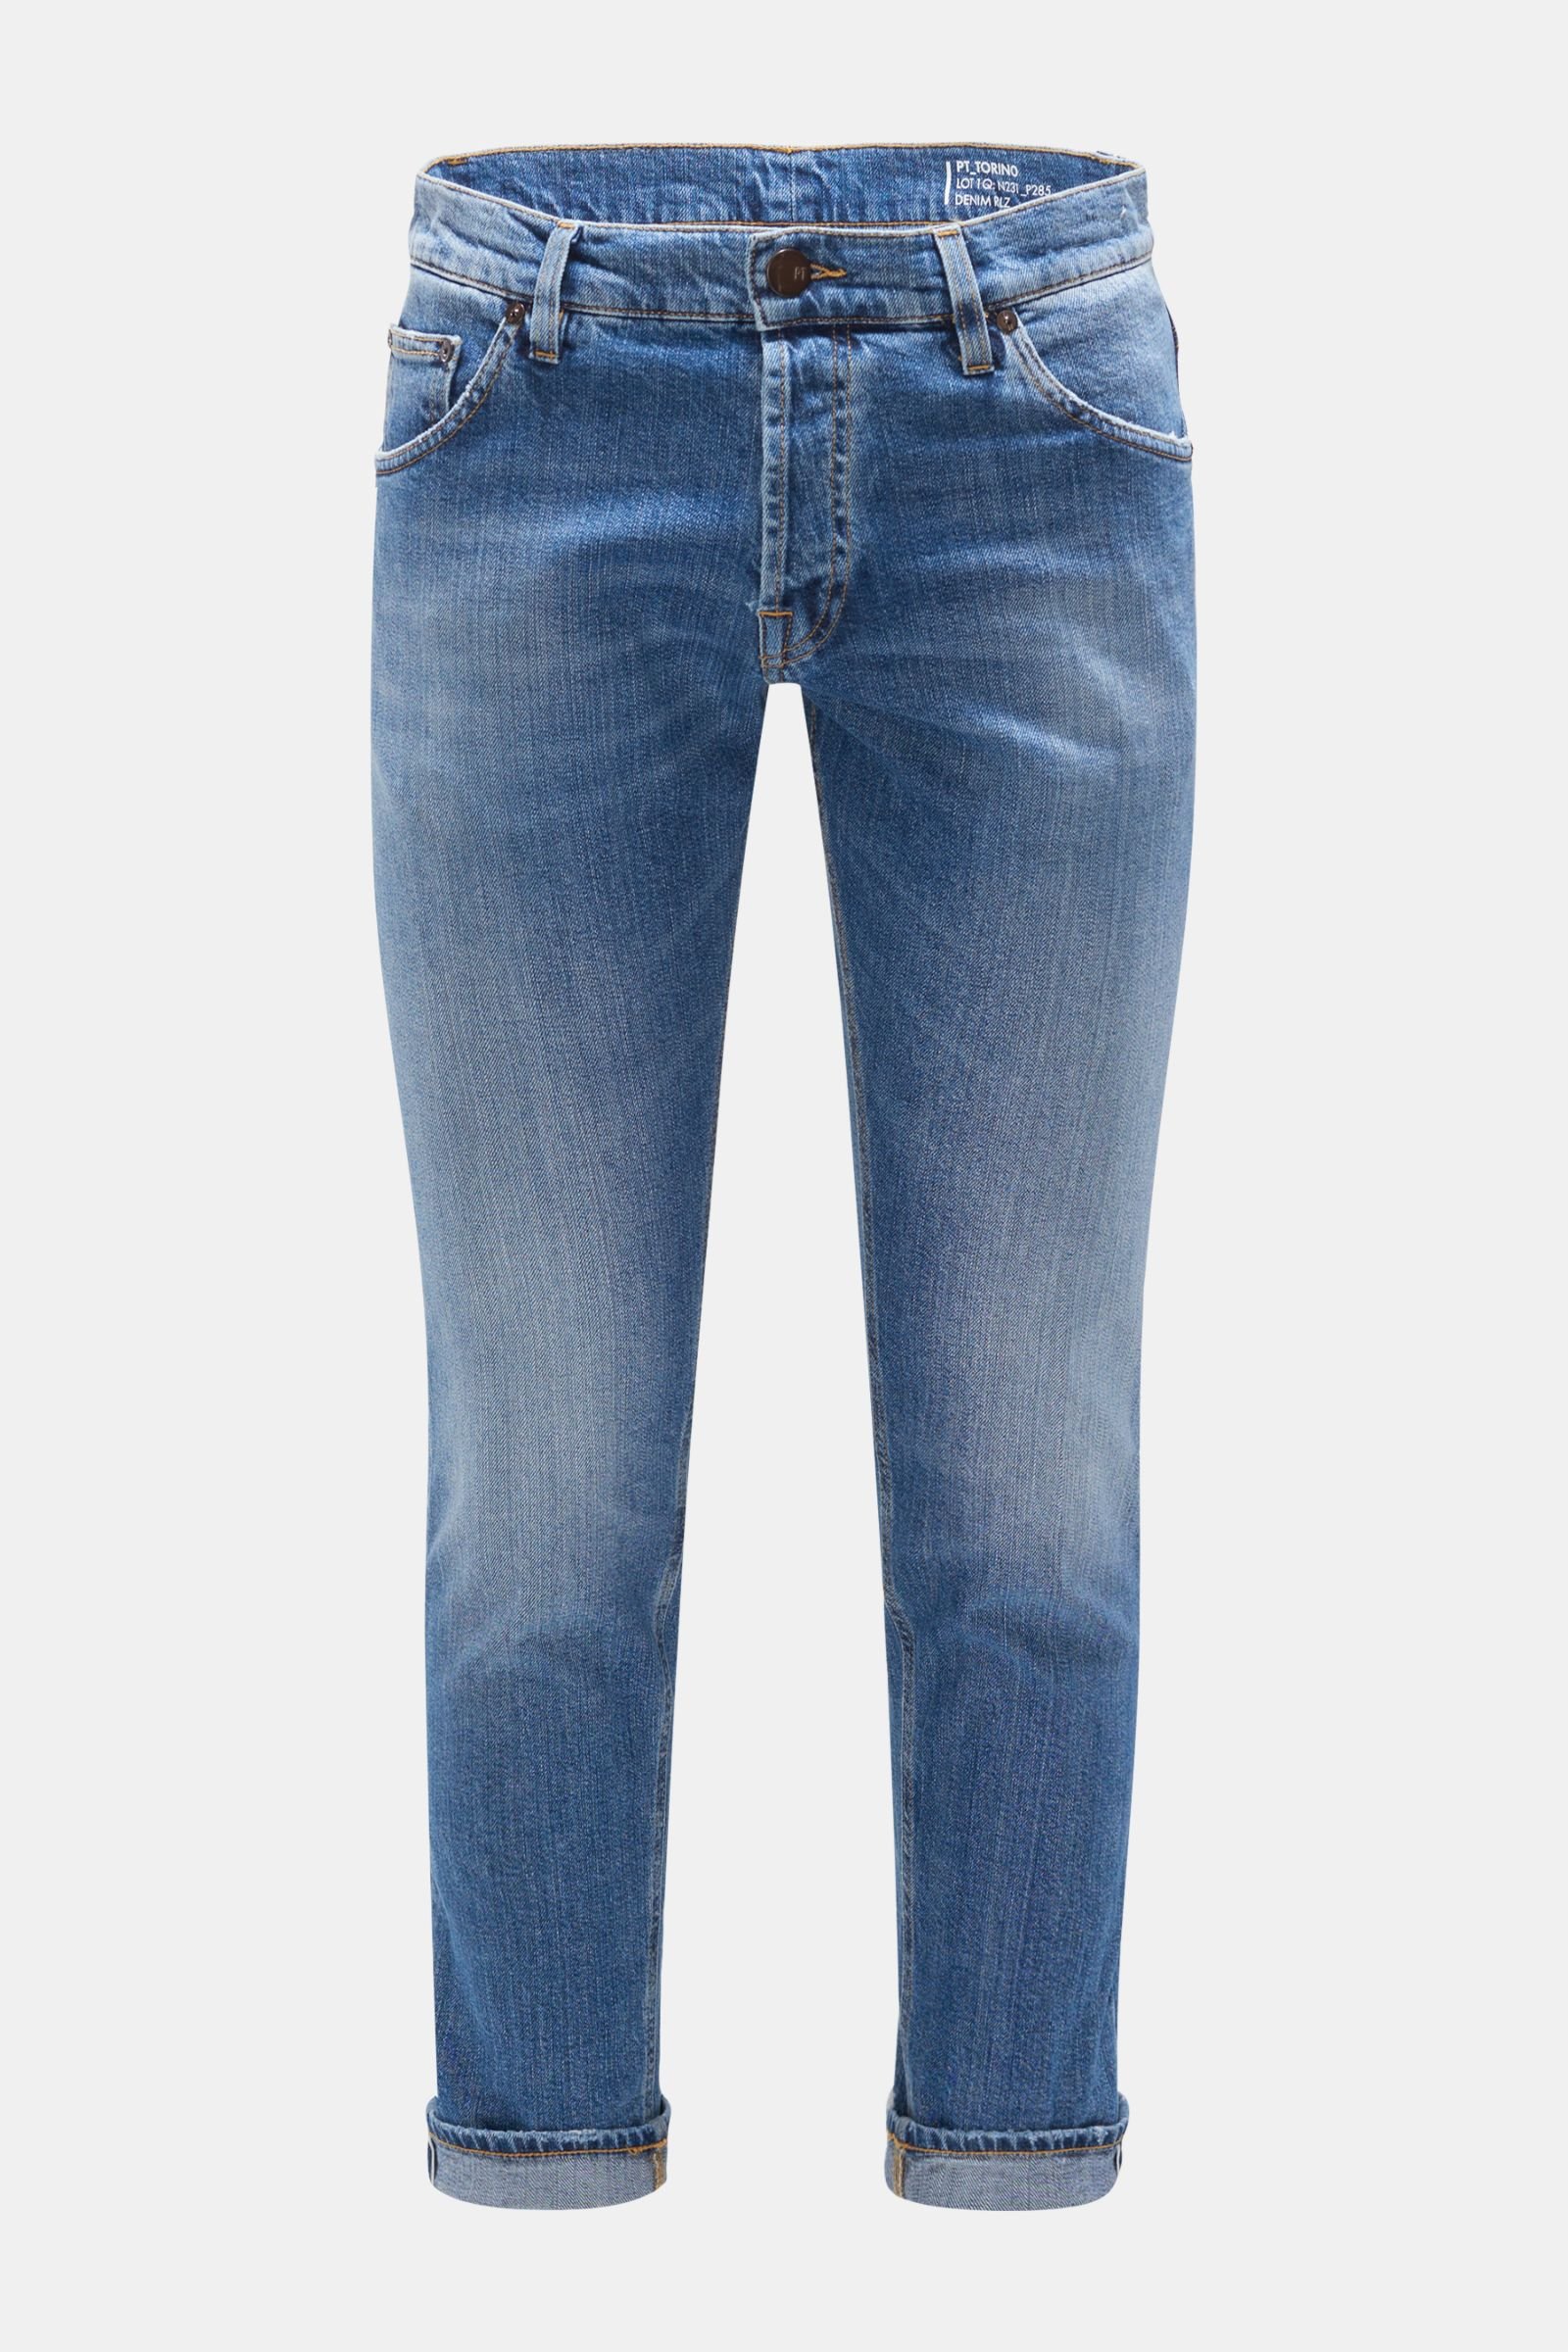 PT TORINO DENIM jeans 'Dub' grey-blue | BRAUN Hamburg